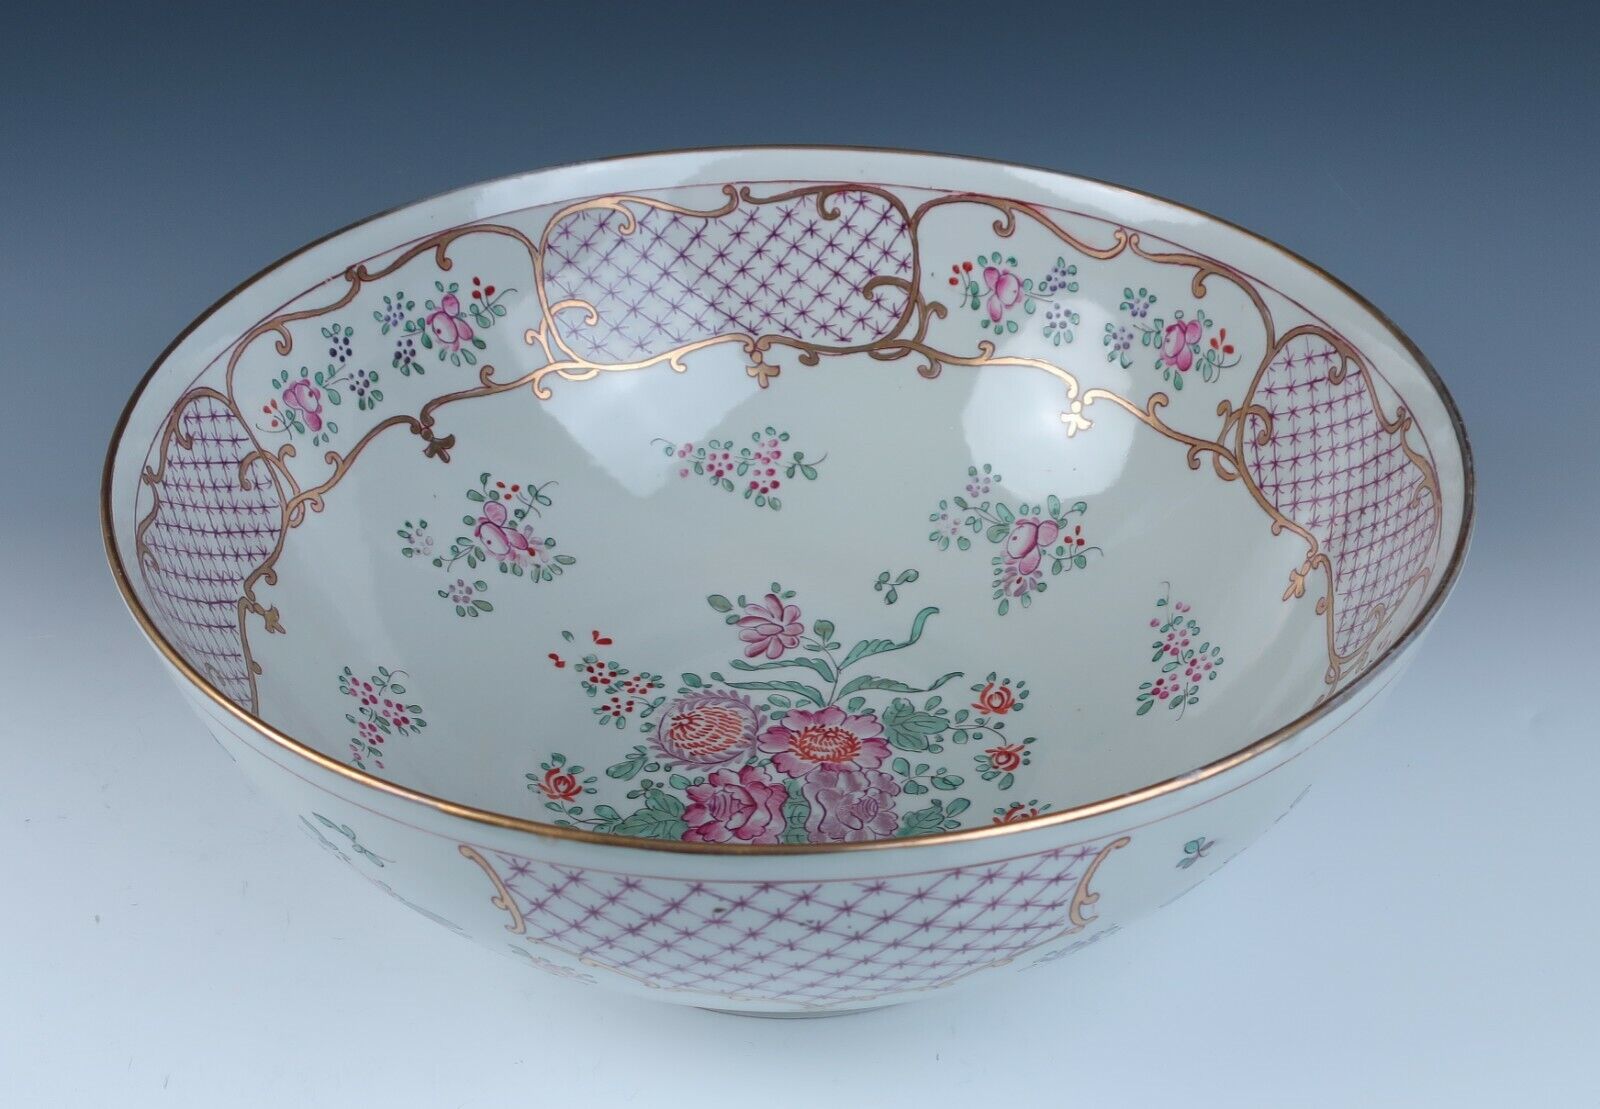 Edme Samson Extra Large Chinese Export Style Porcelain Punch Bowl French Antique